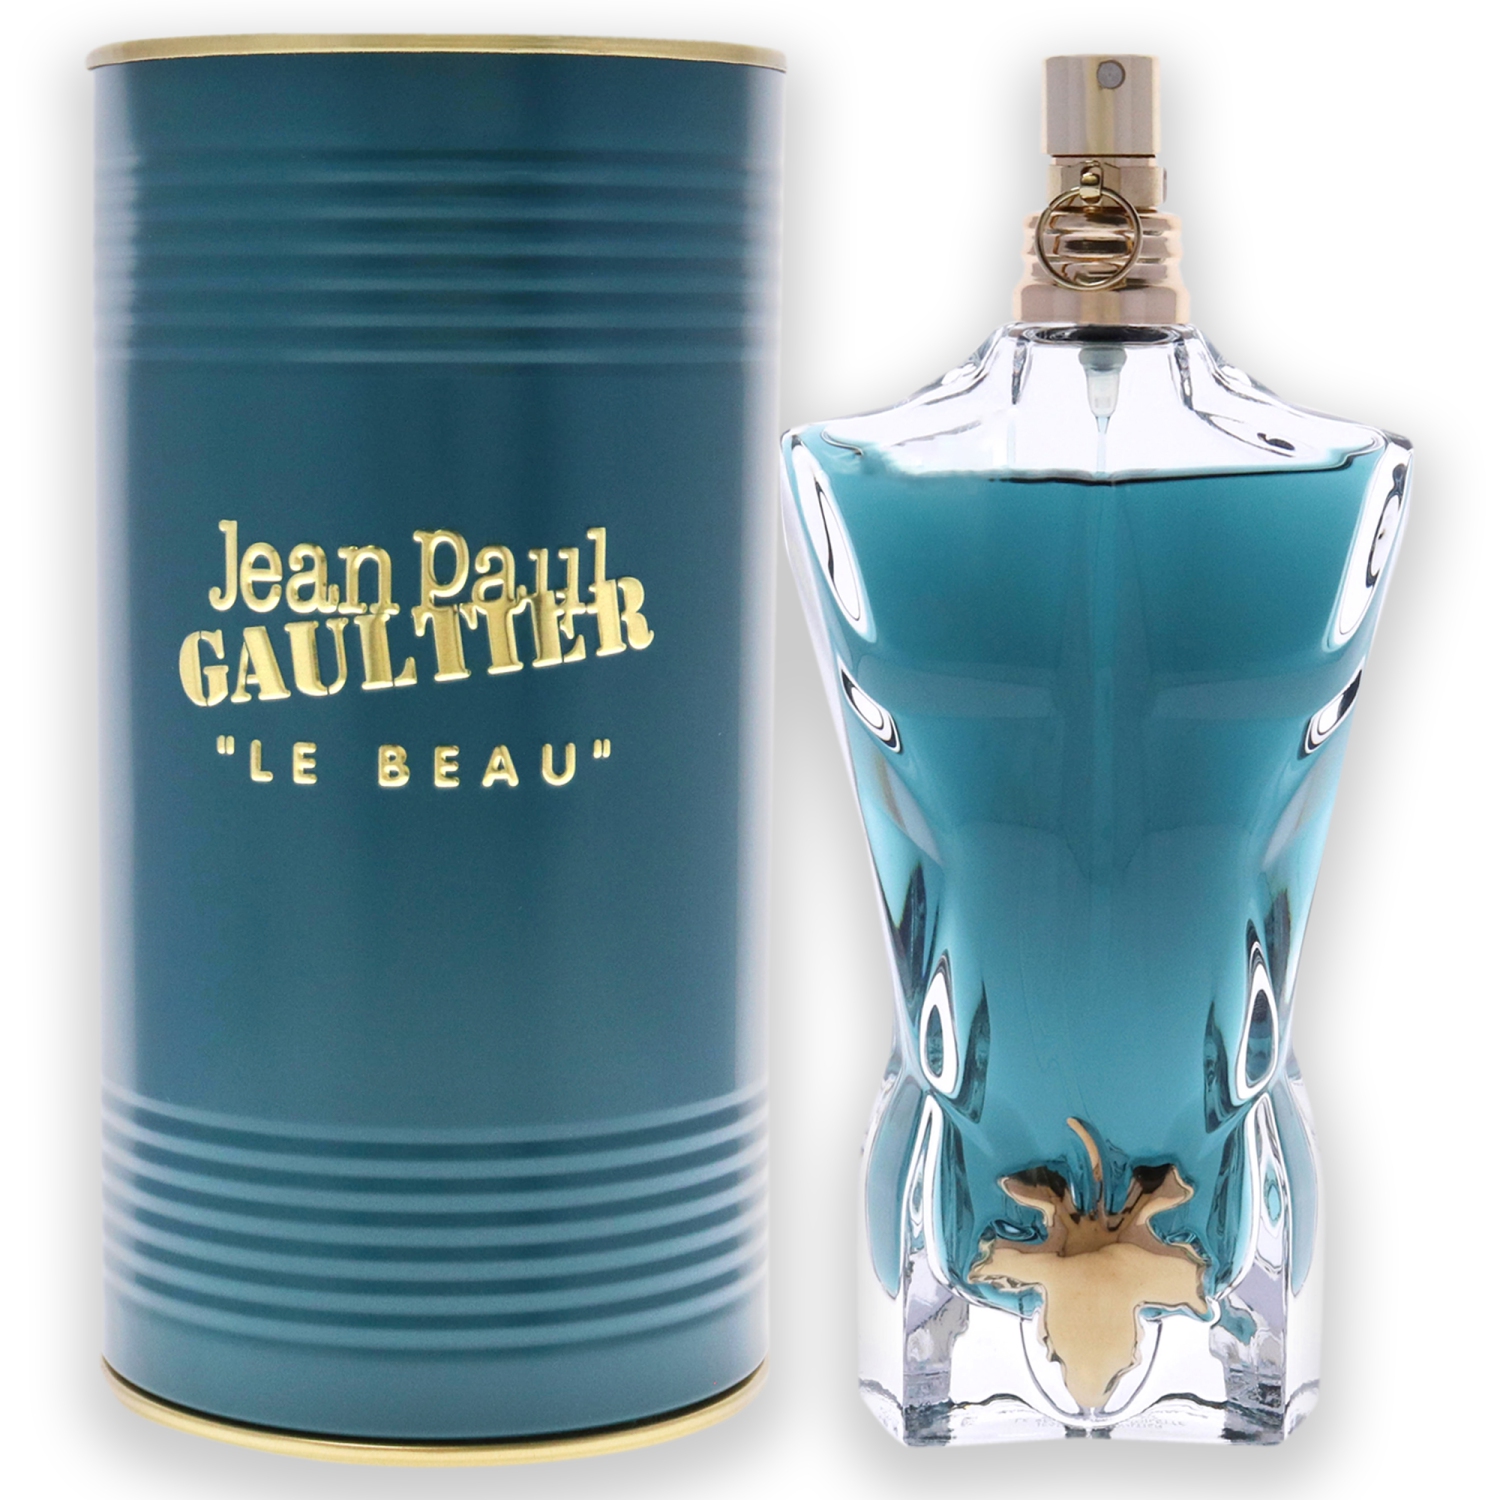 Le Beau by Jean Paul Gaultier for Men - 4.2 oz EDT Spray